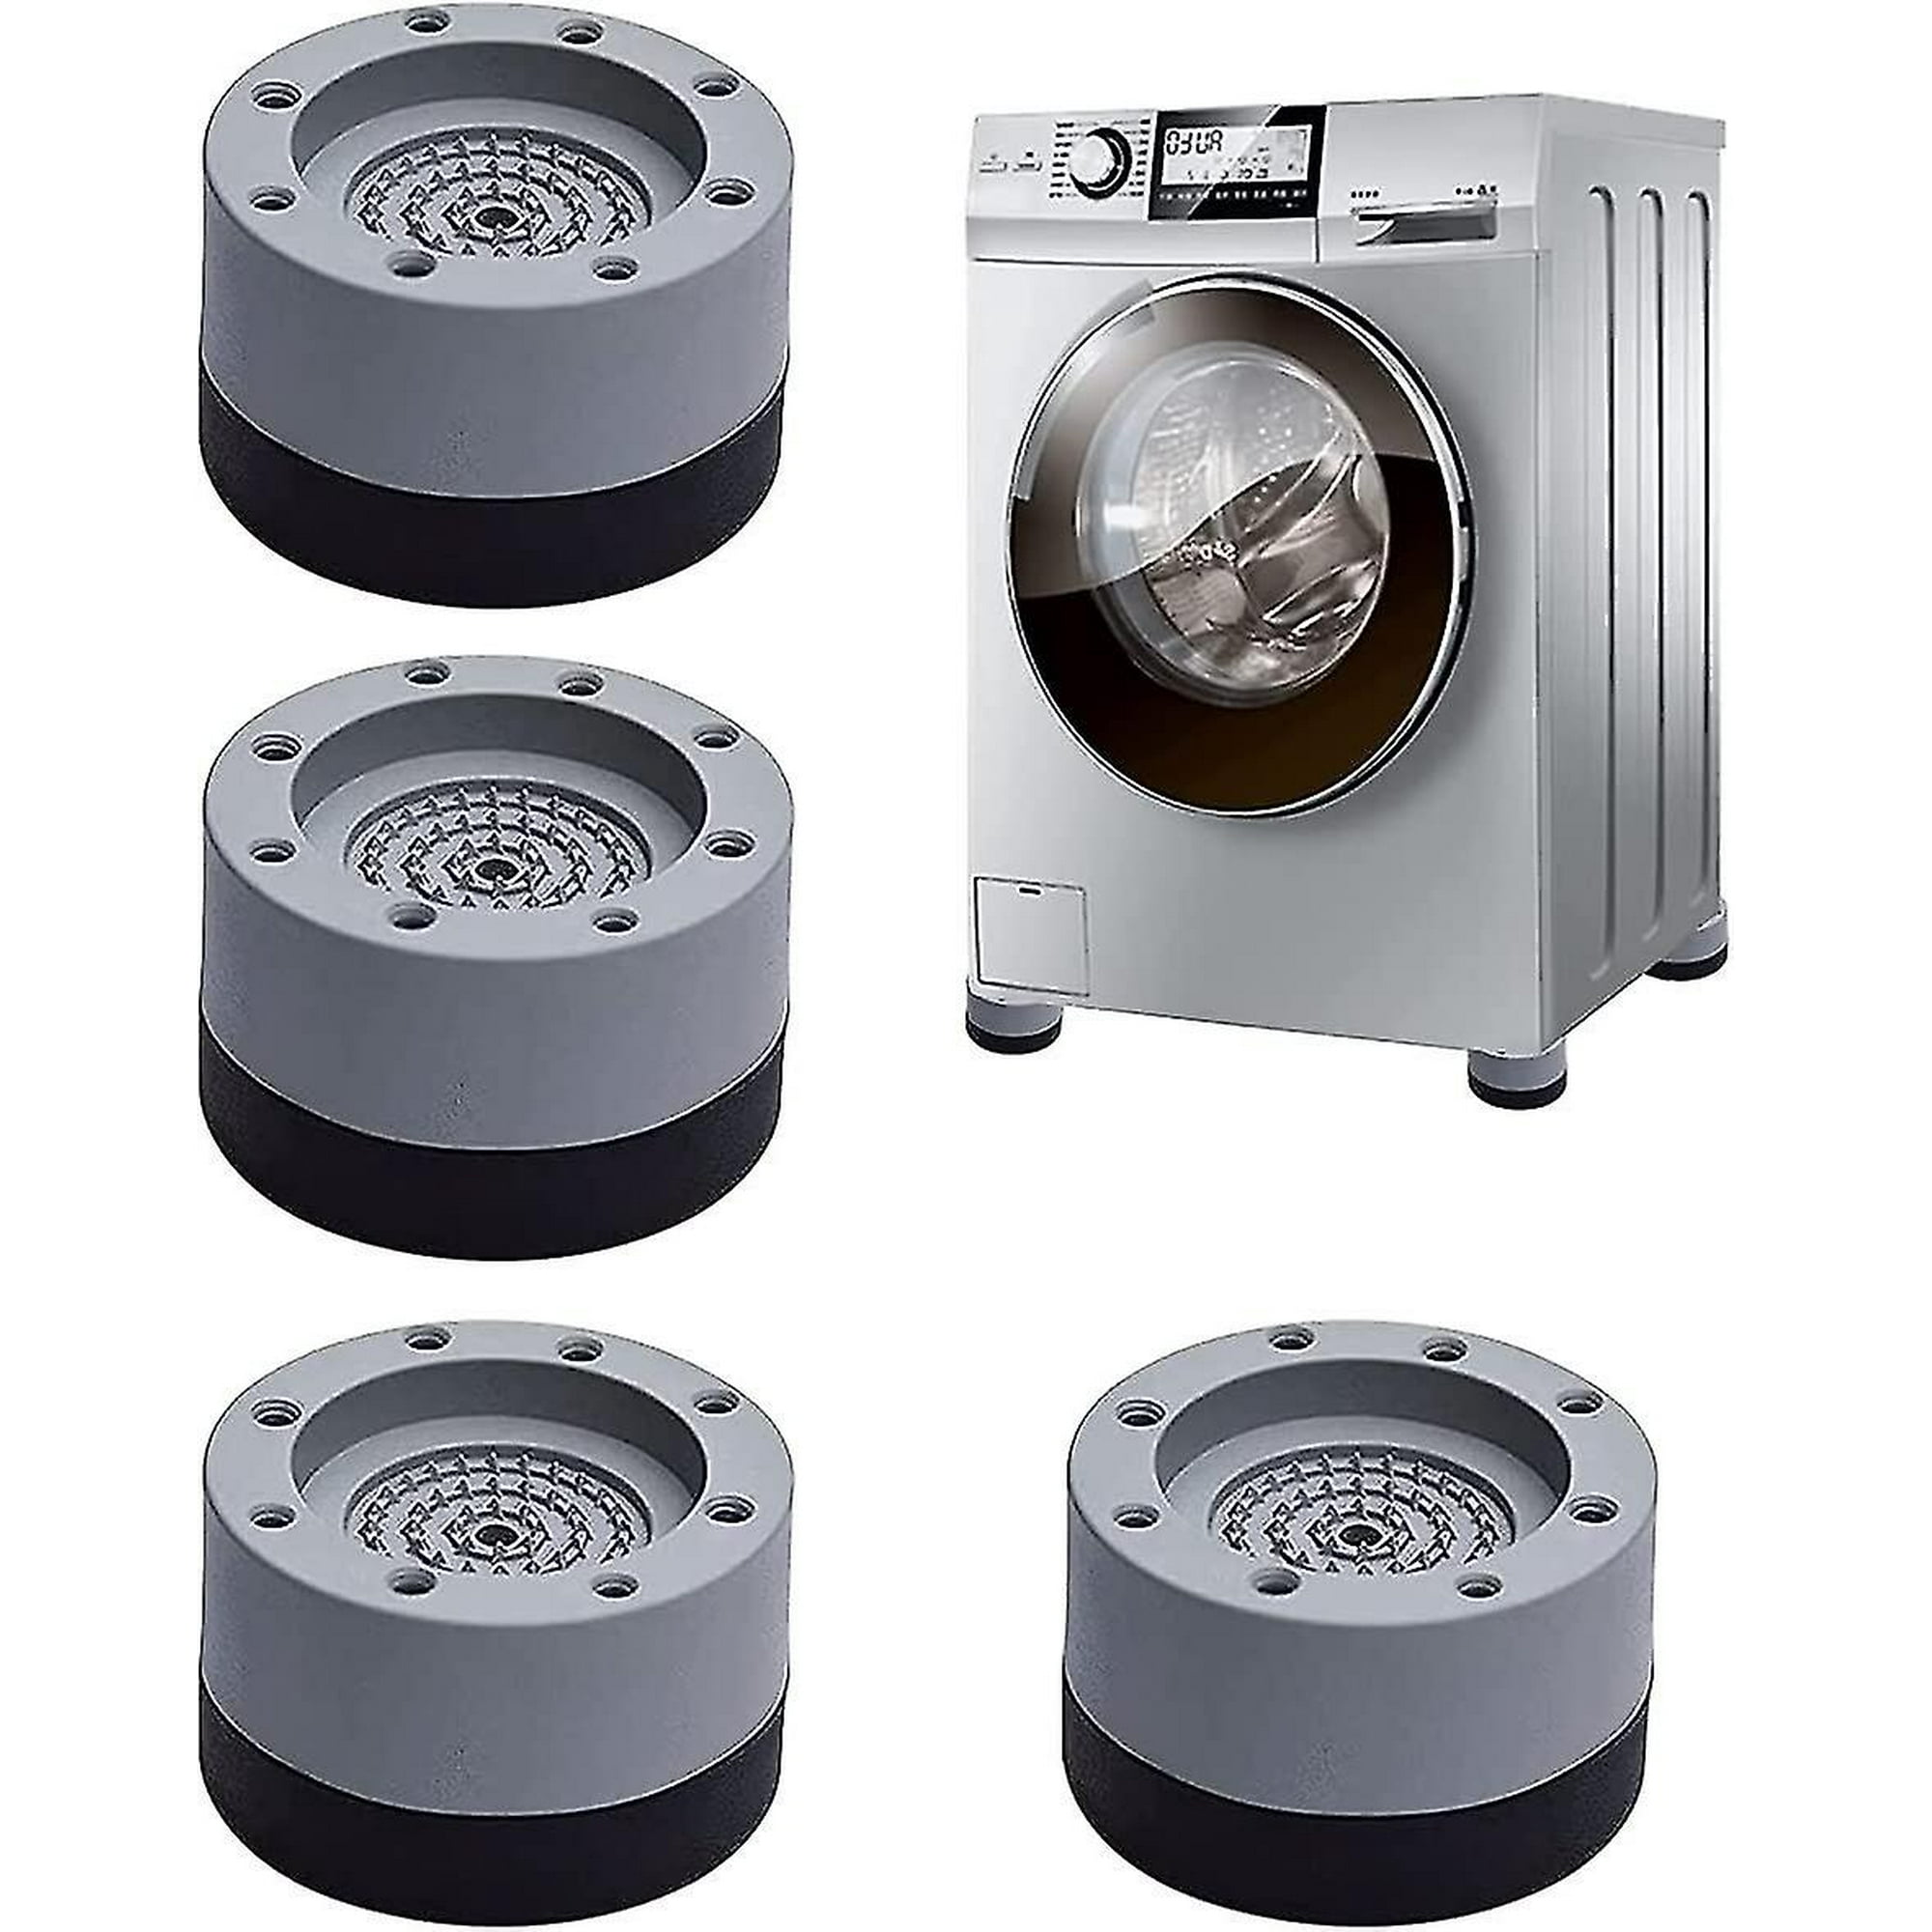 Patas antivibracion para lavarropas y secarropas x4 / BL235-WEJZD140-30